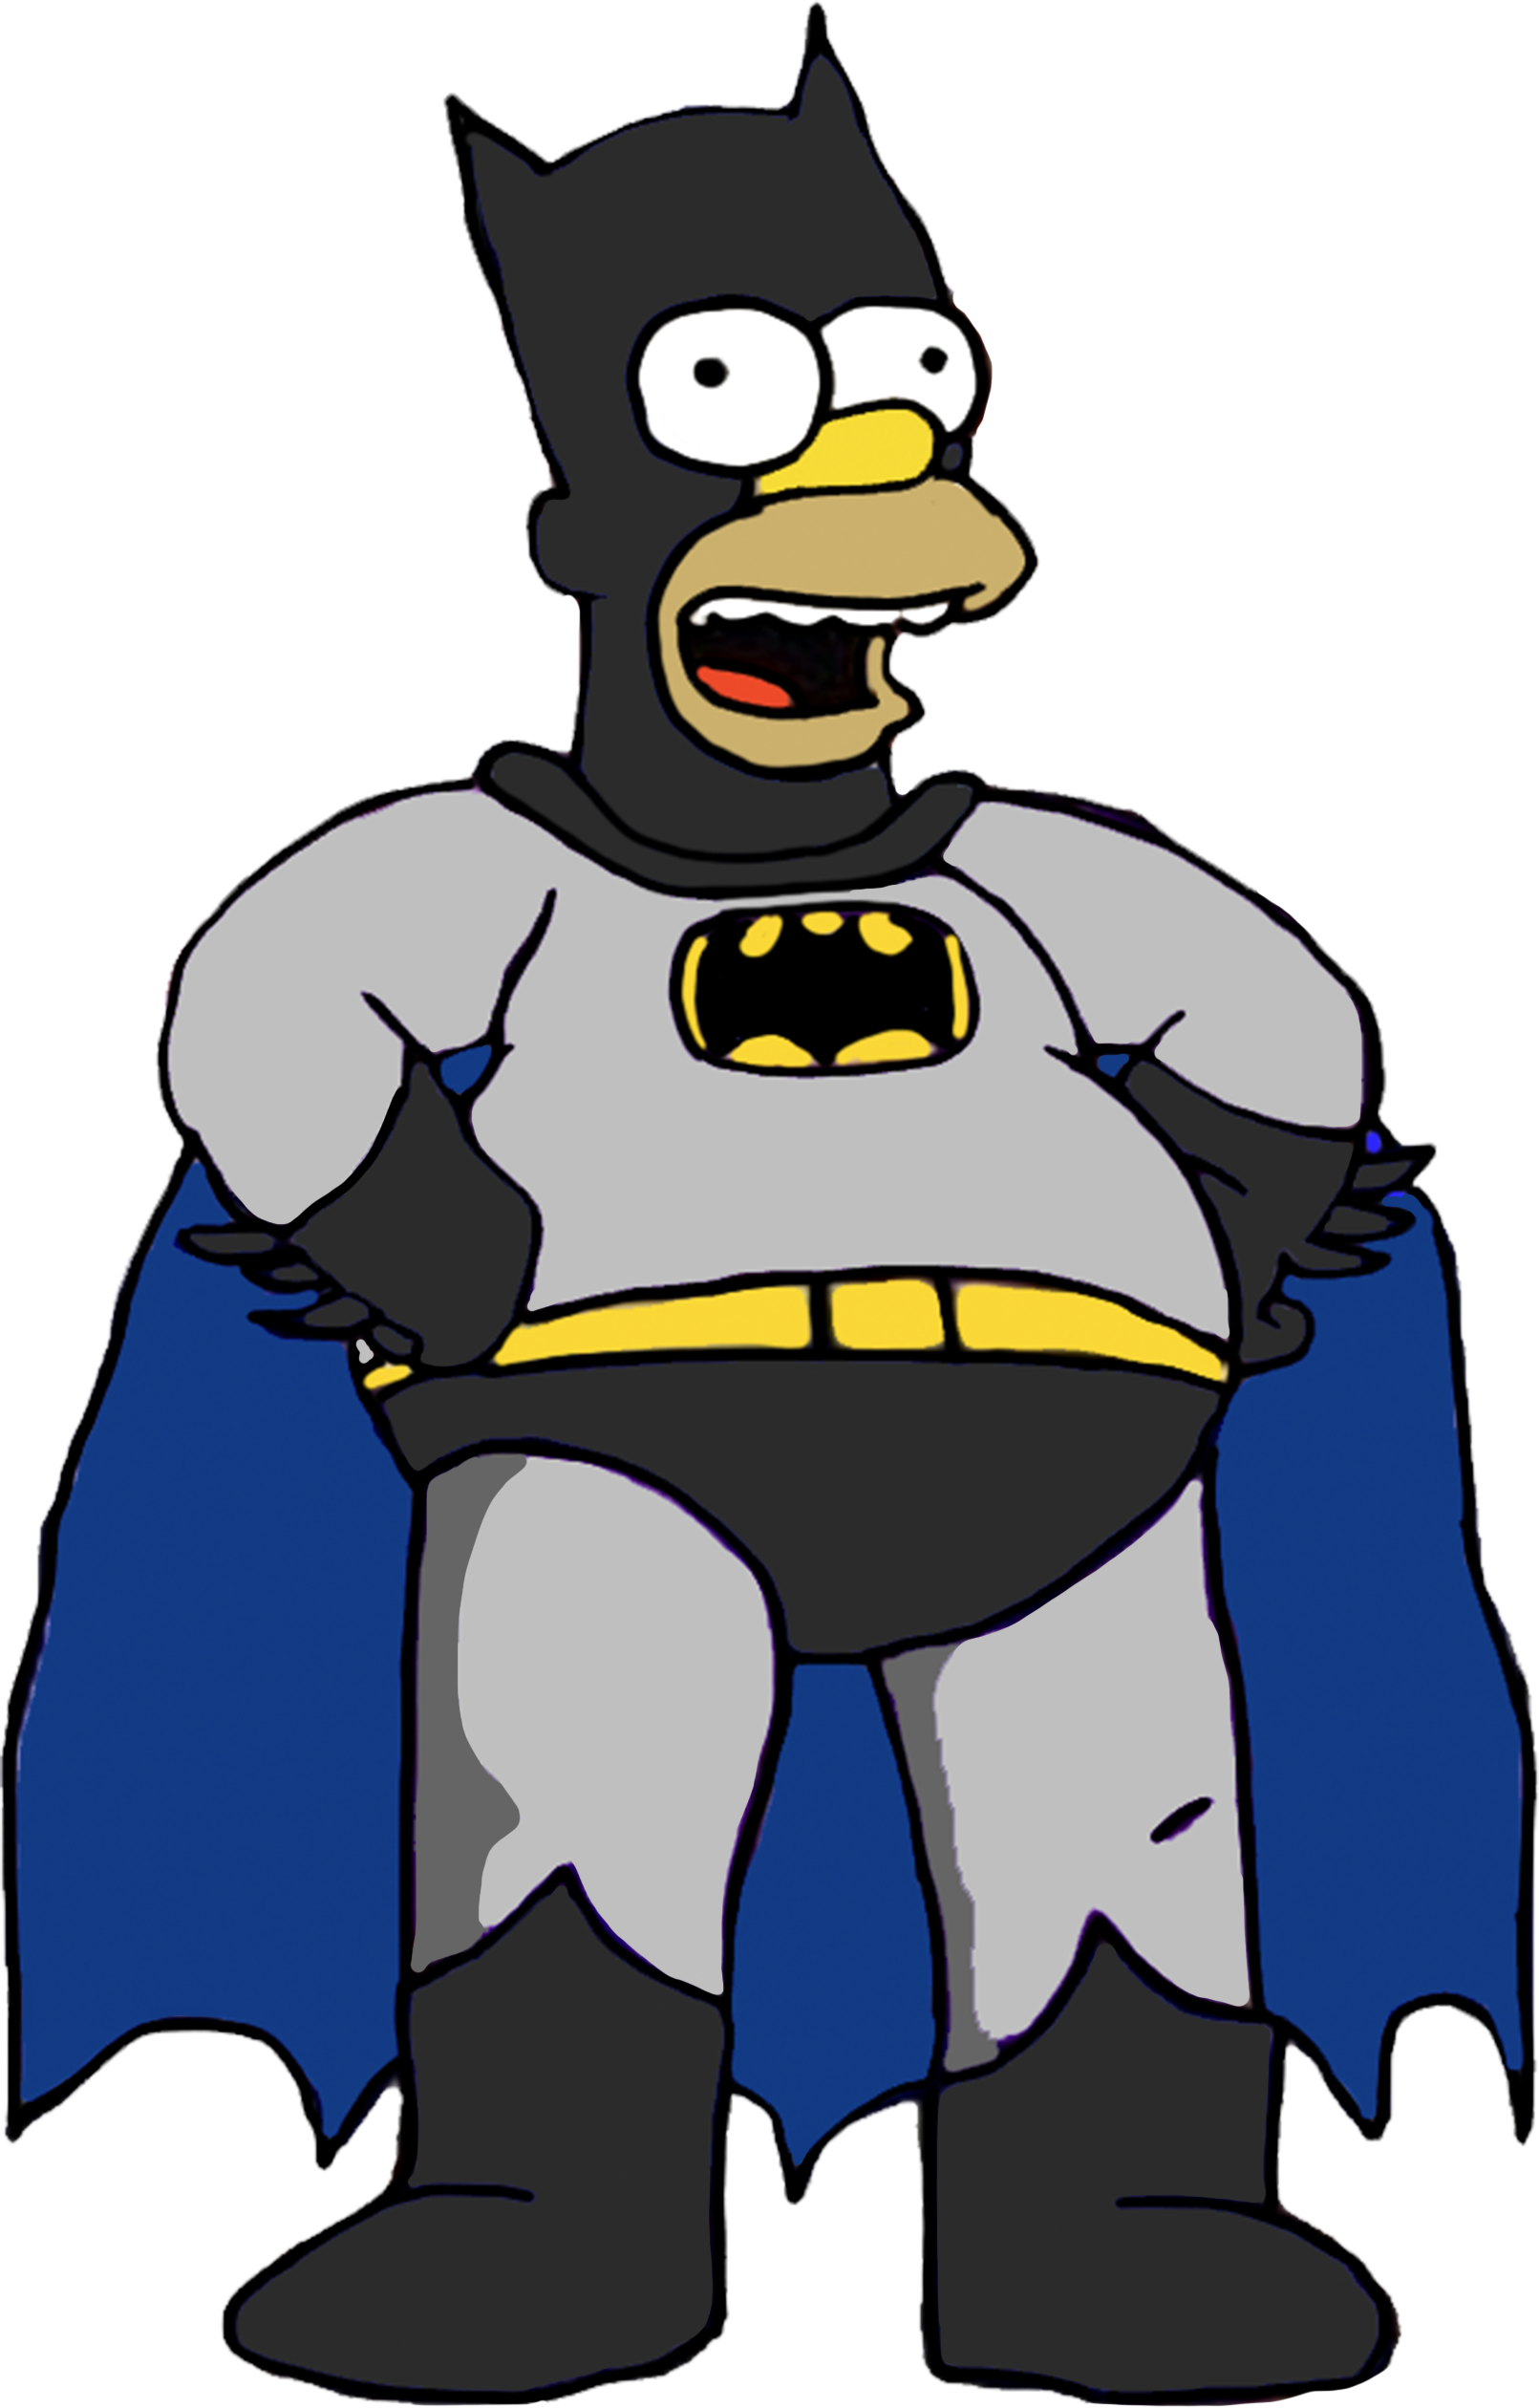 Homer Simpson as Batman by HomerSimpson1983 on DeviantArt